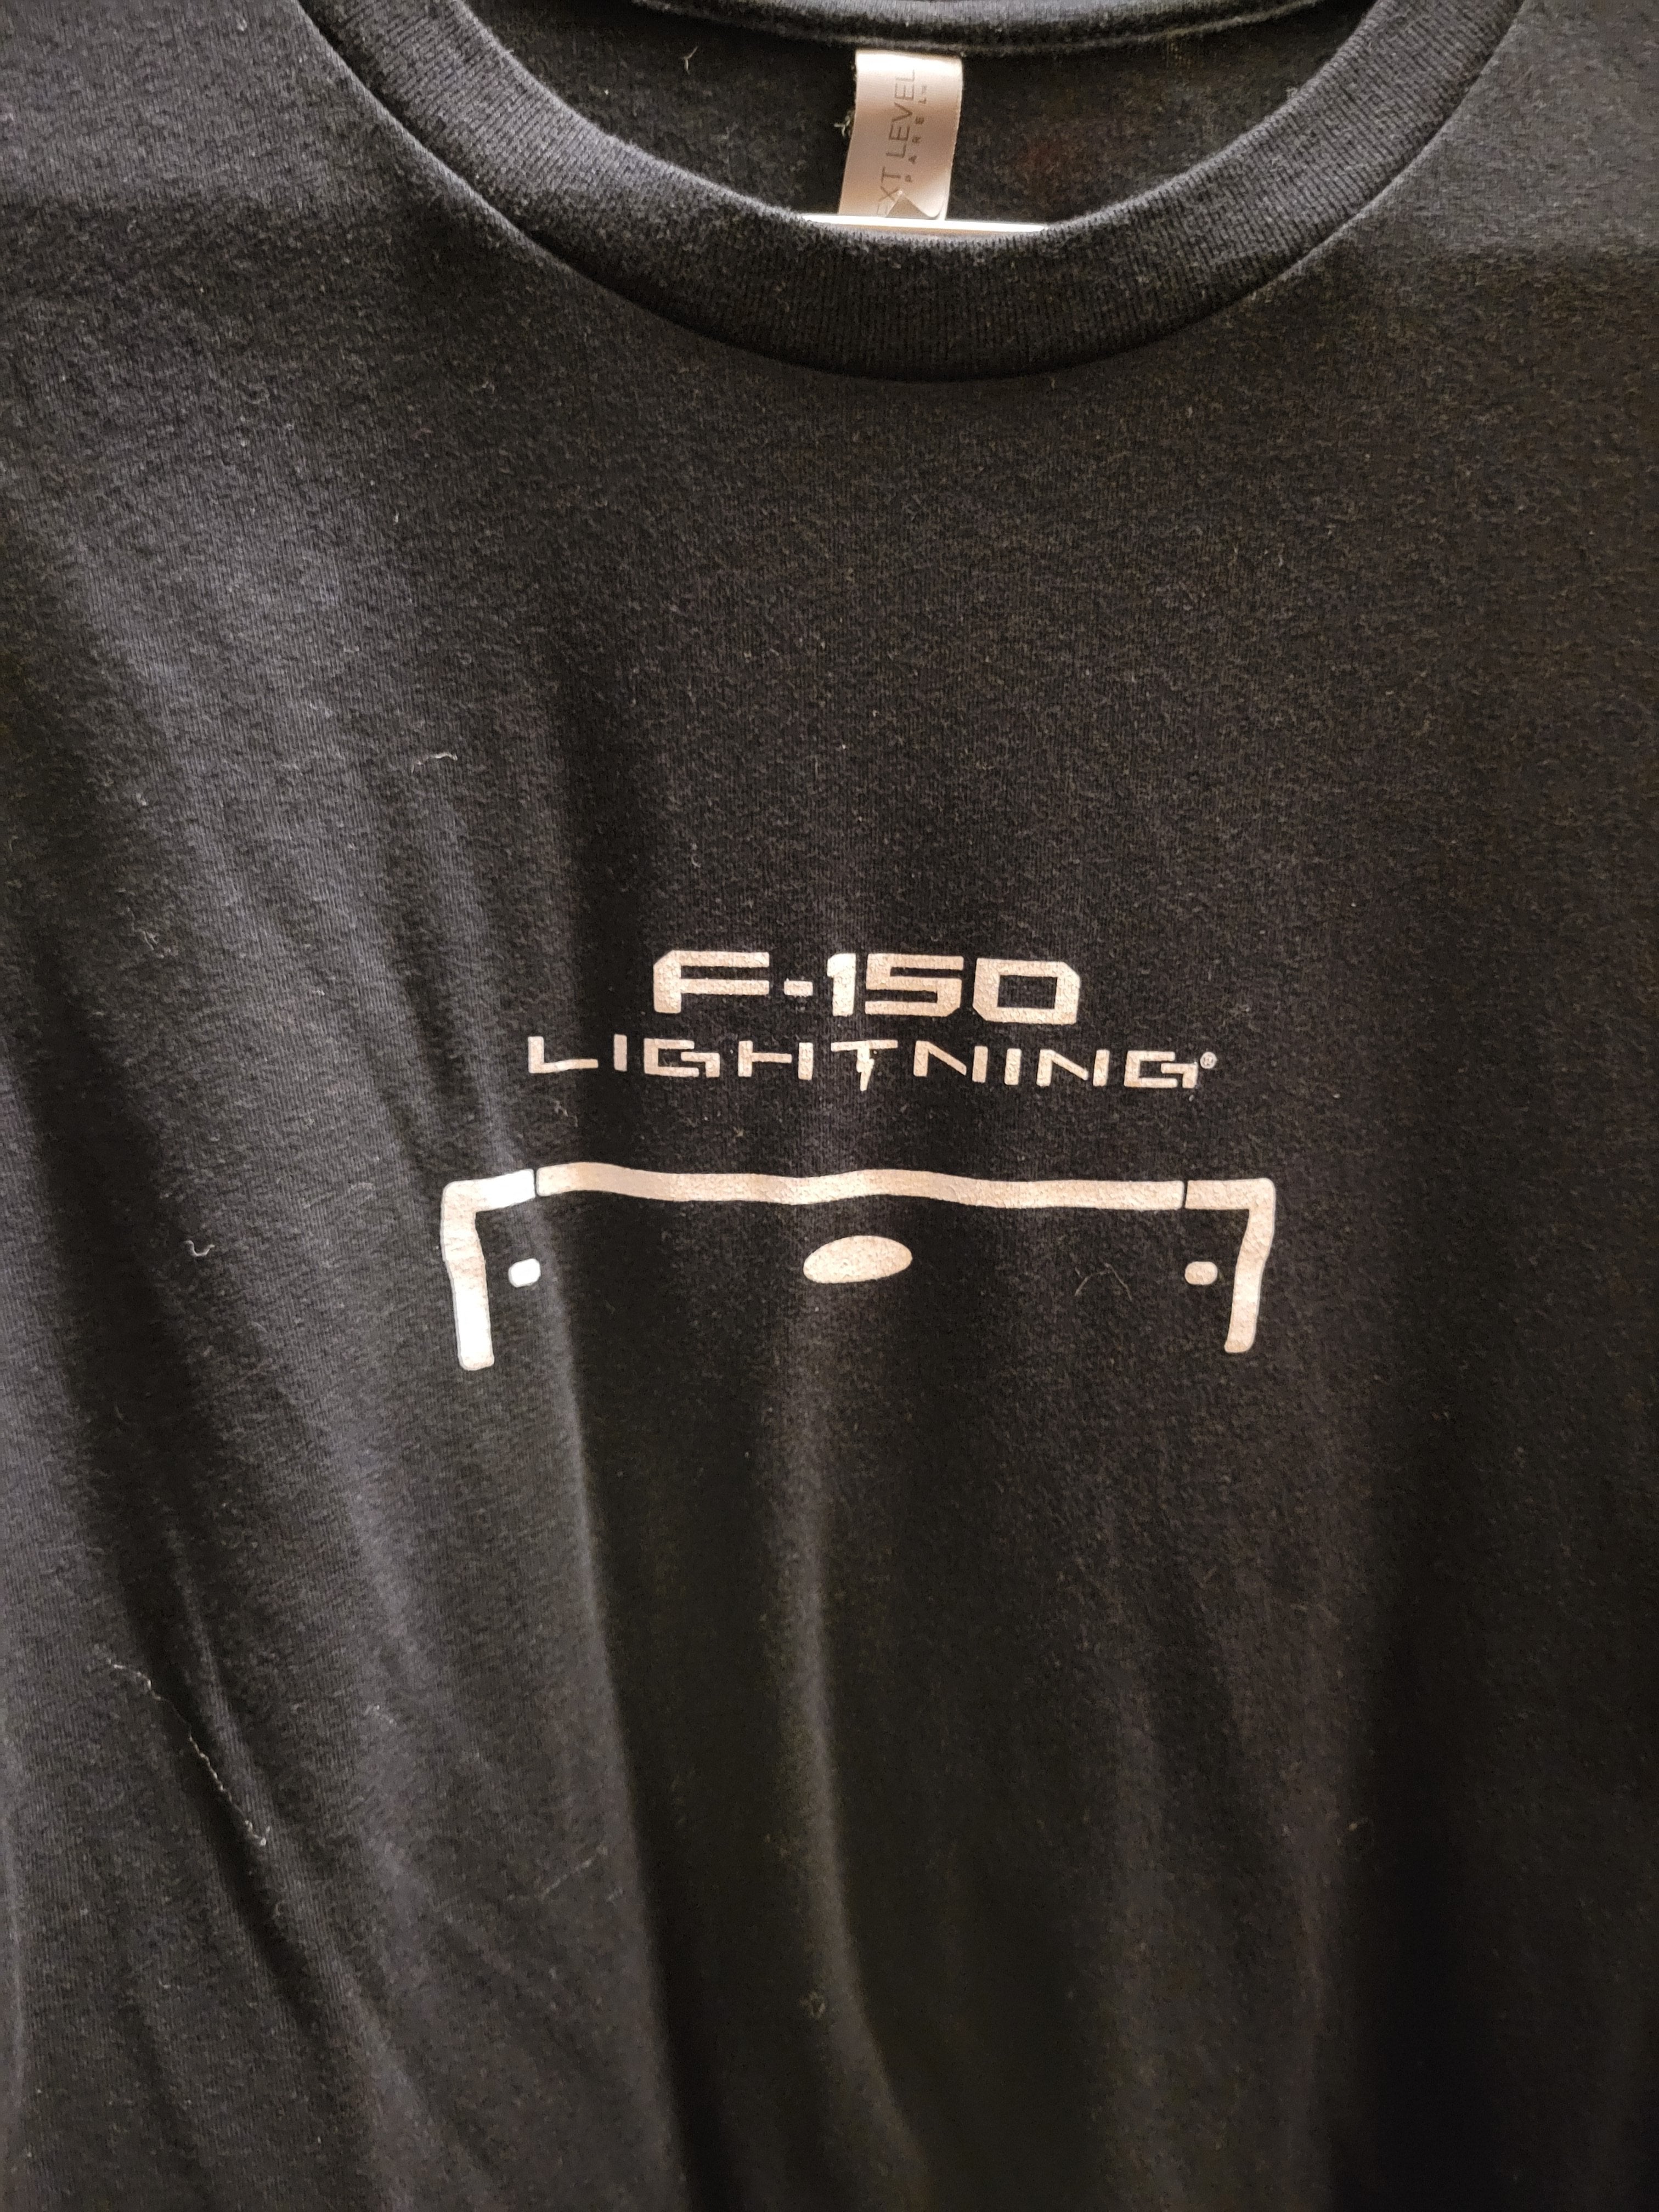 Lightning Platinum at Buffalo Auto Show | ⚡ Ford Lightning Forum ⚡